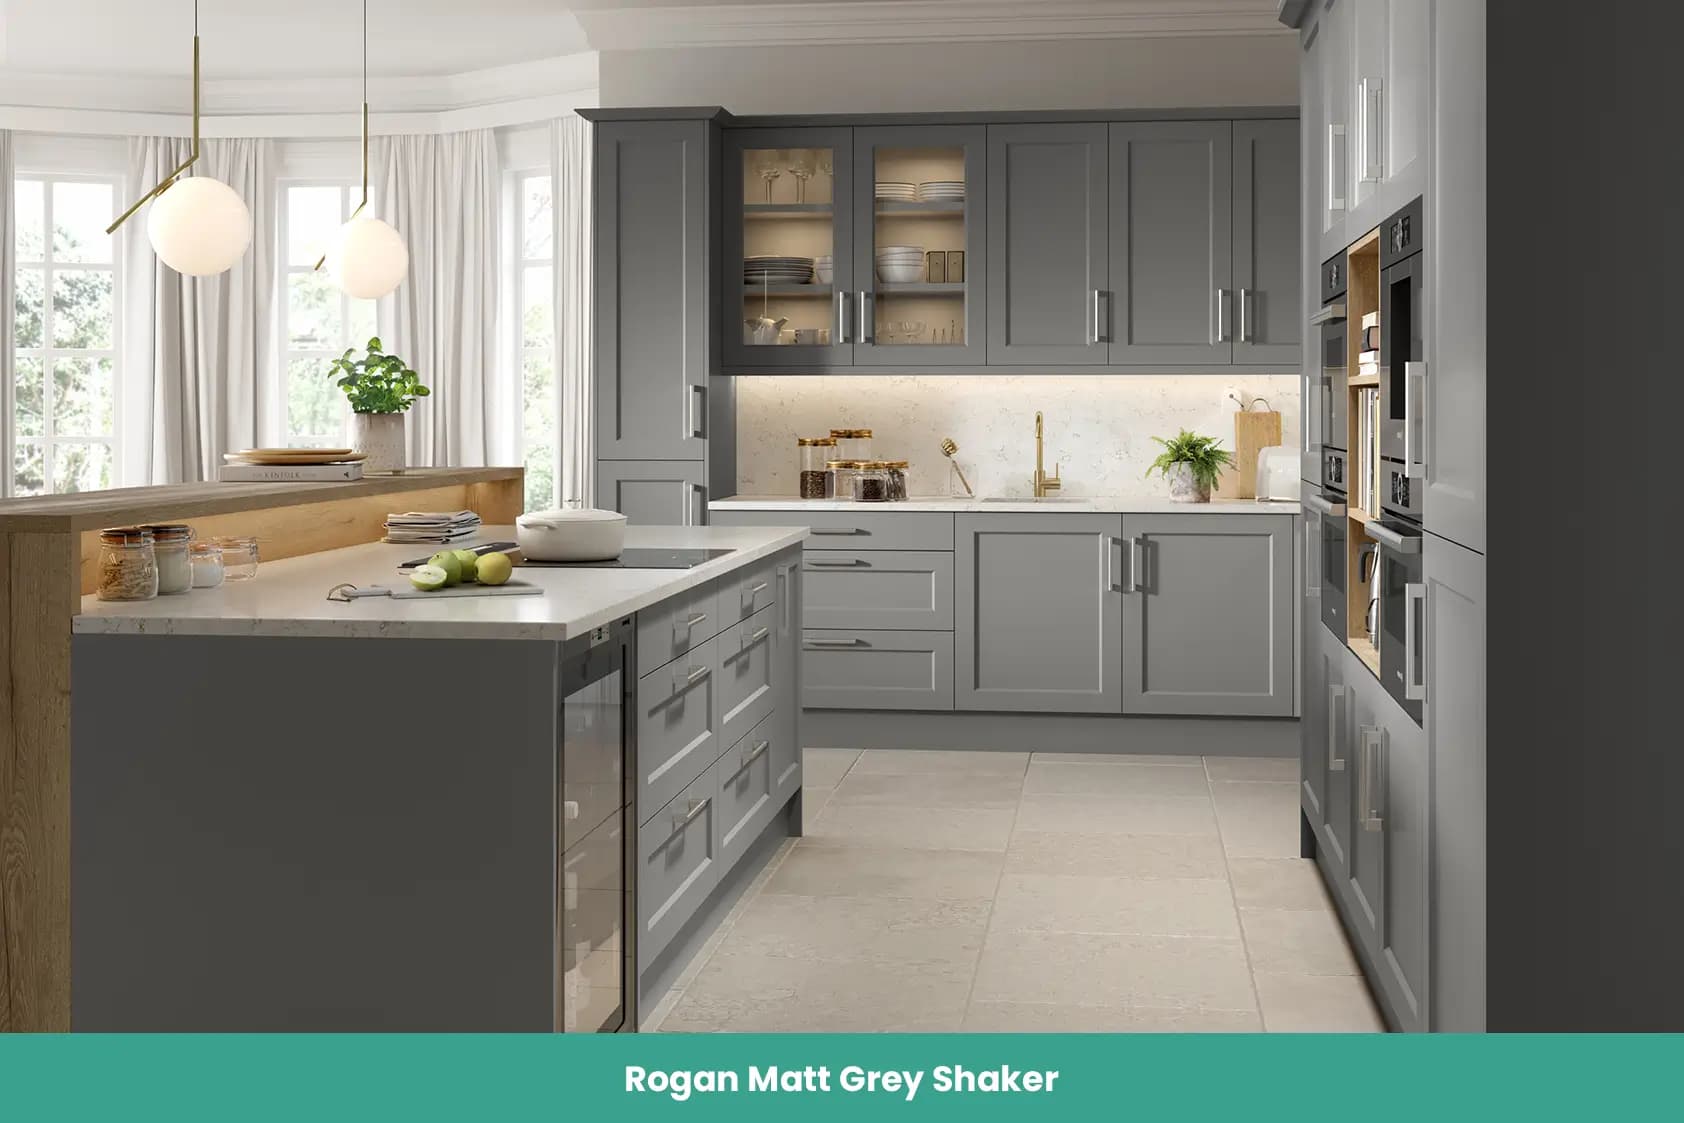 Rogan Matt Grey Shaker Kitchen